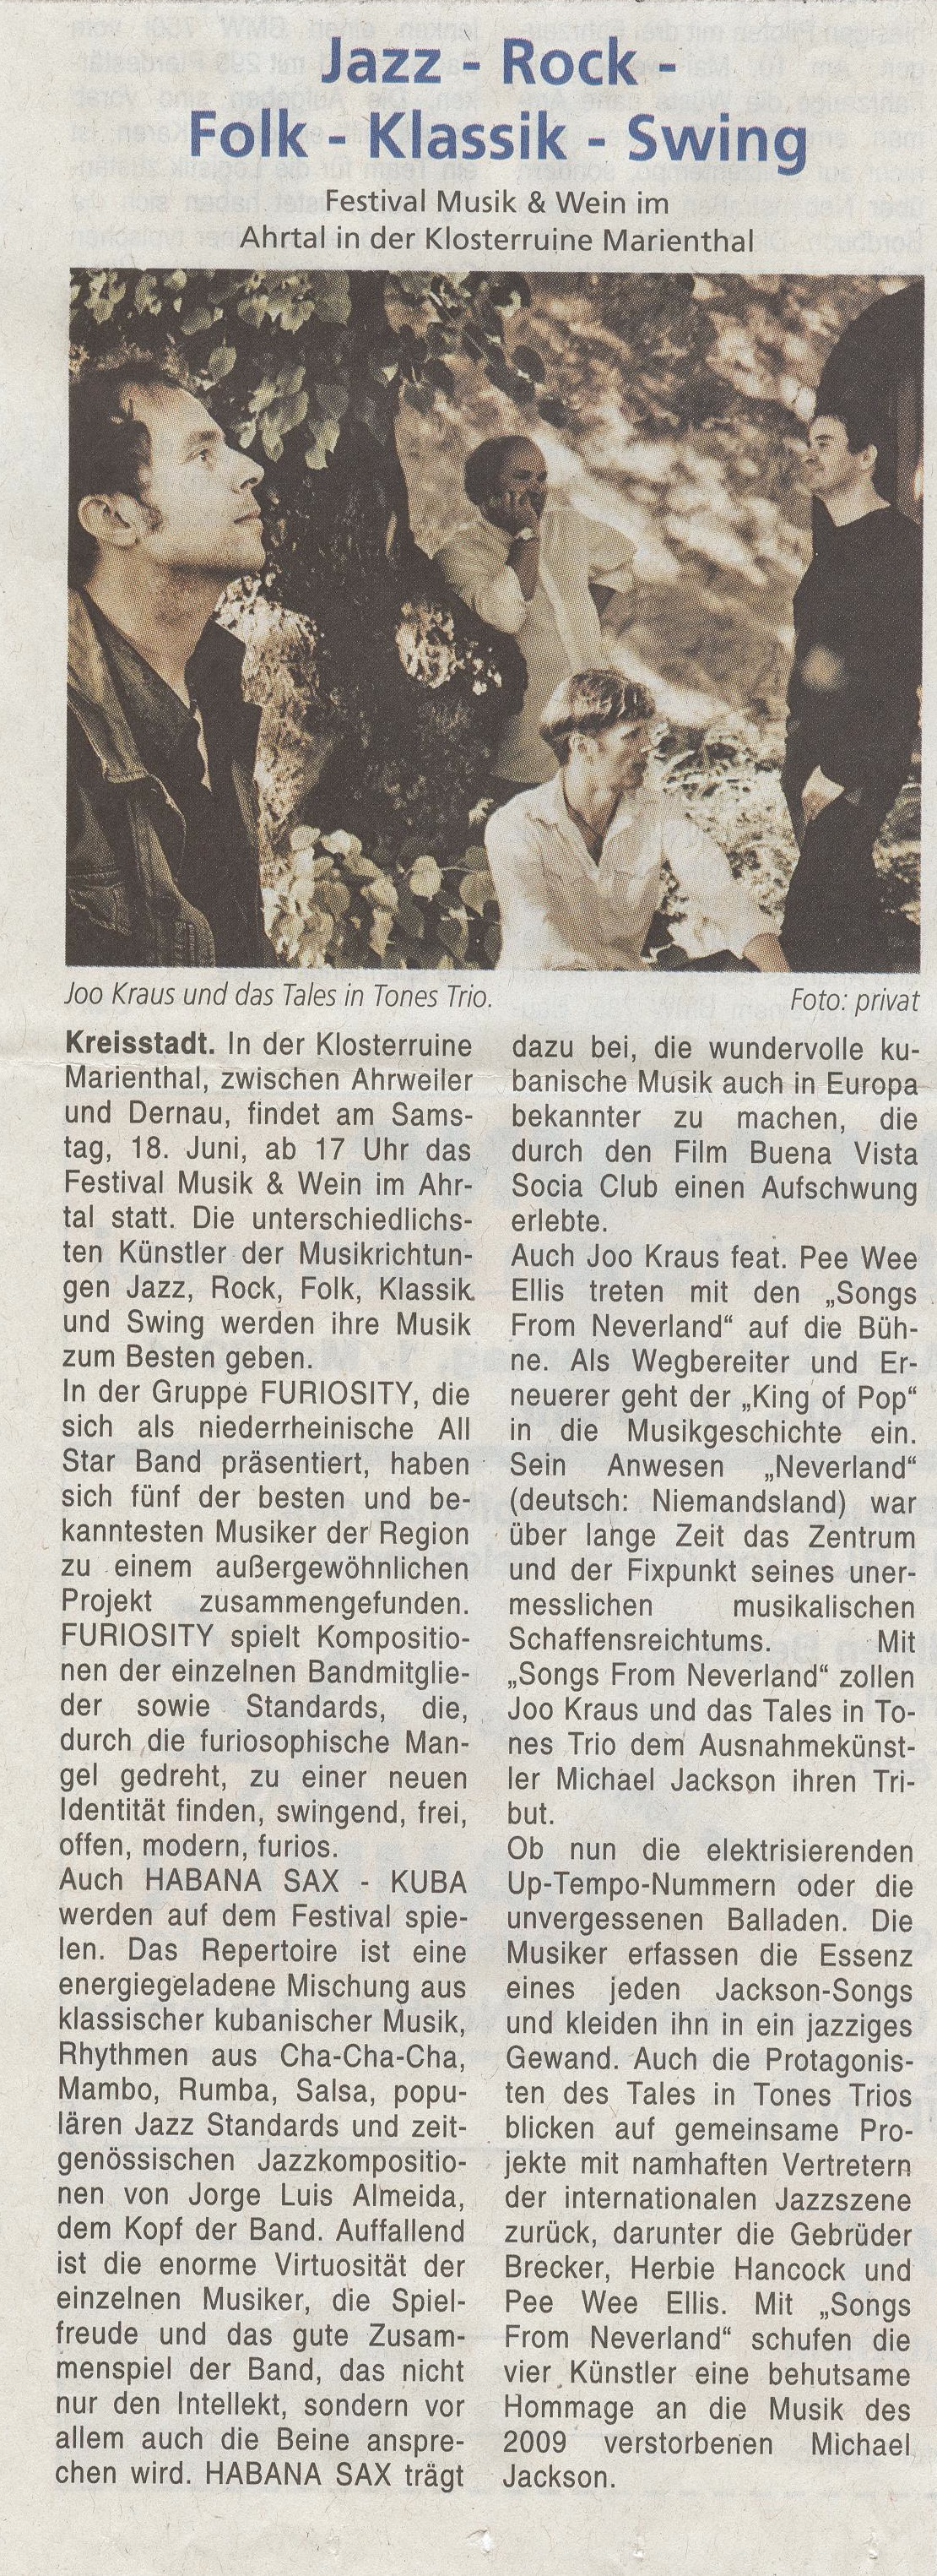 Jazz-Rock-Folk-Klassik-Swing im Ahrtal in der Klosterruine Jazzvorbericht 2011